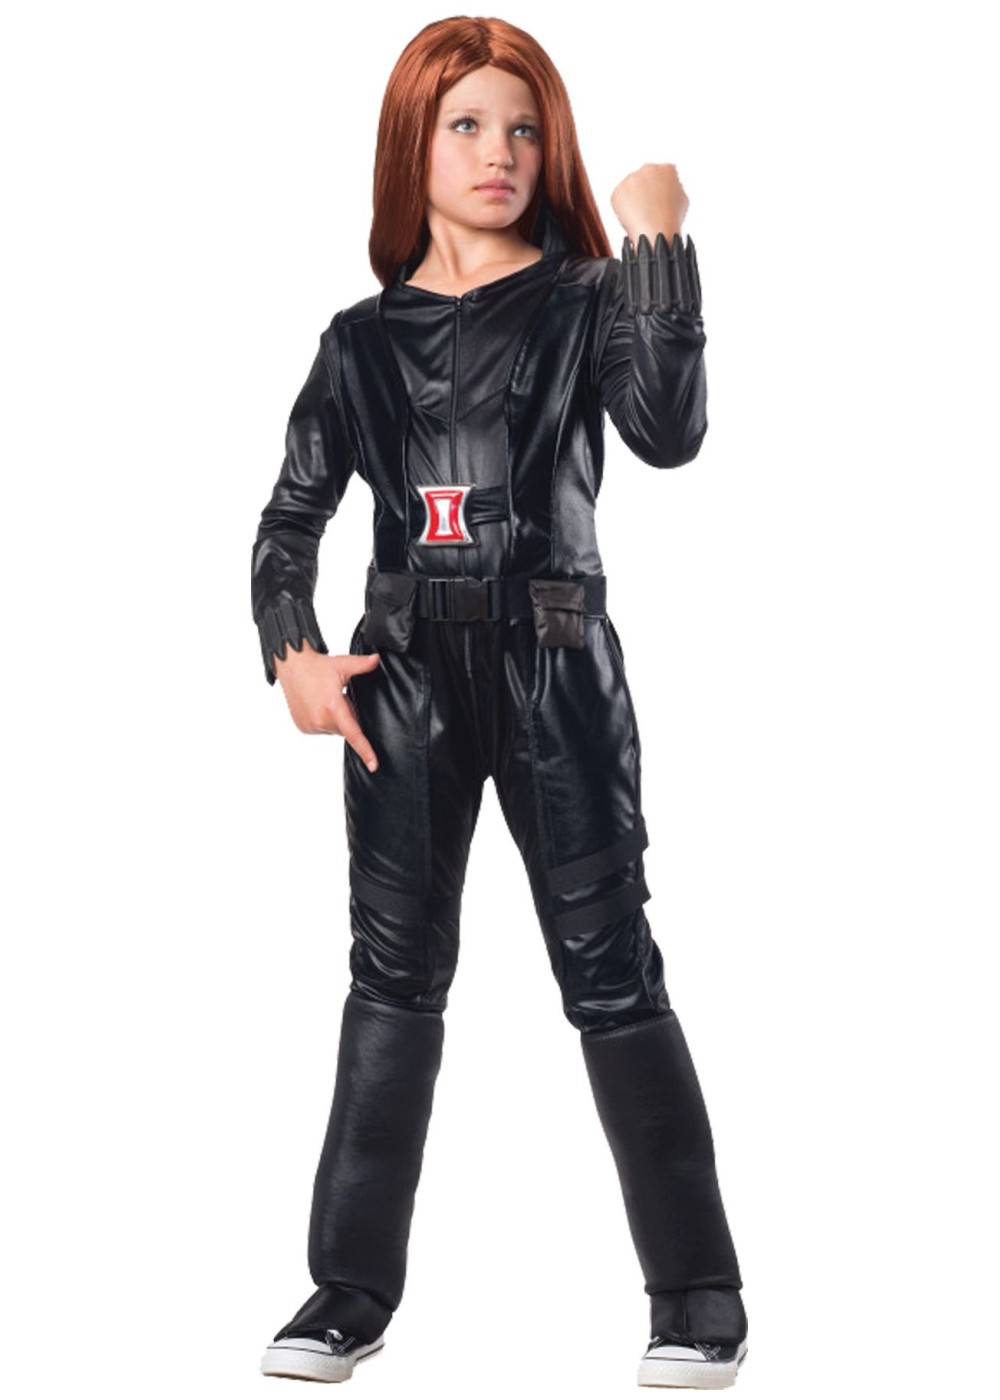  Girls Marvel Black Widow Costume